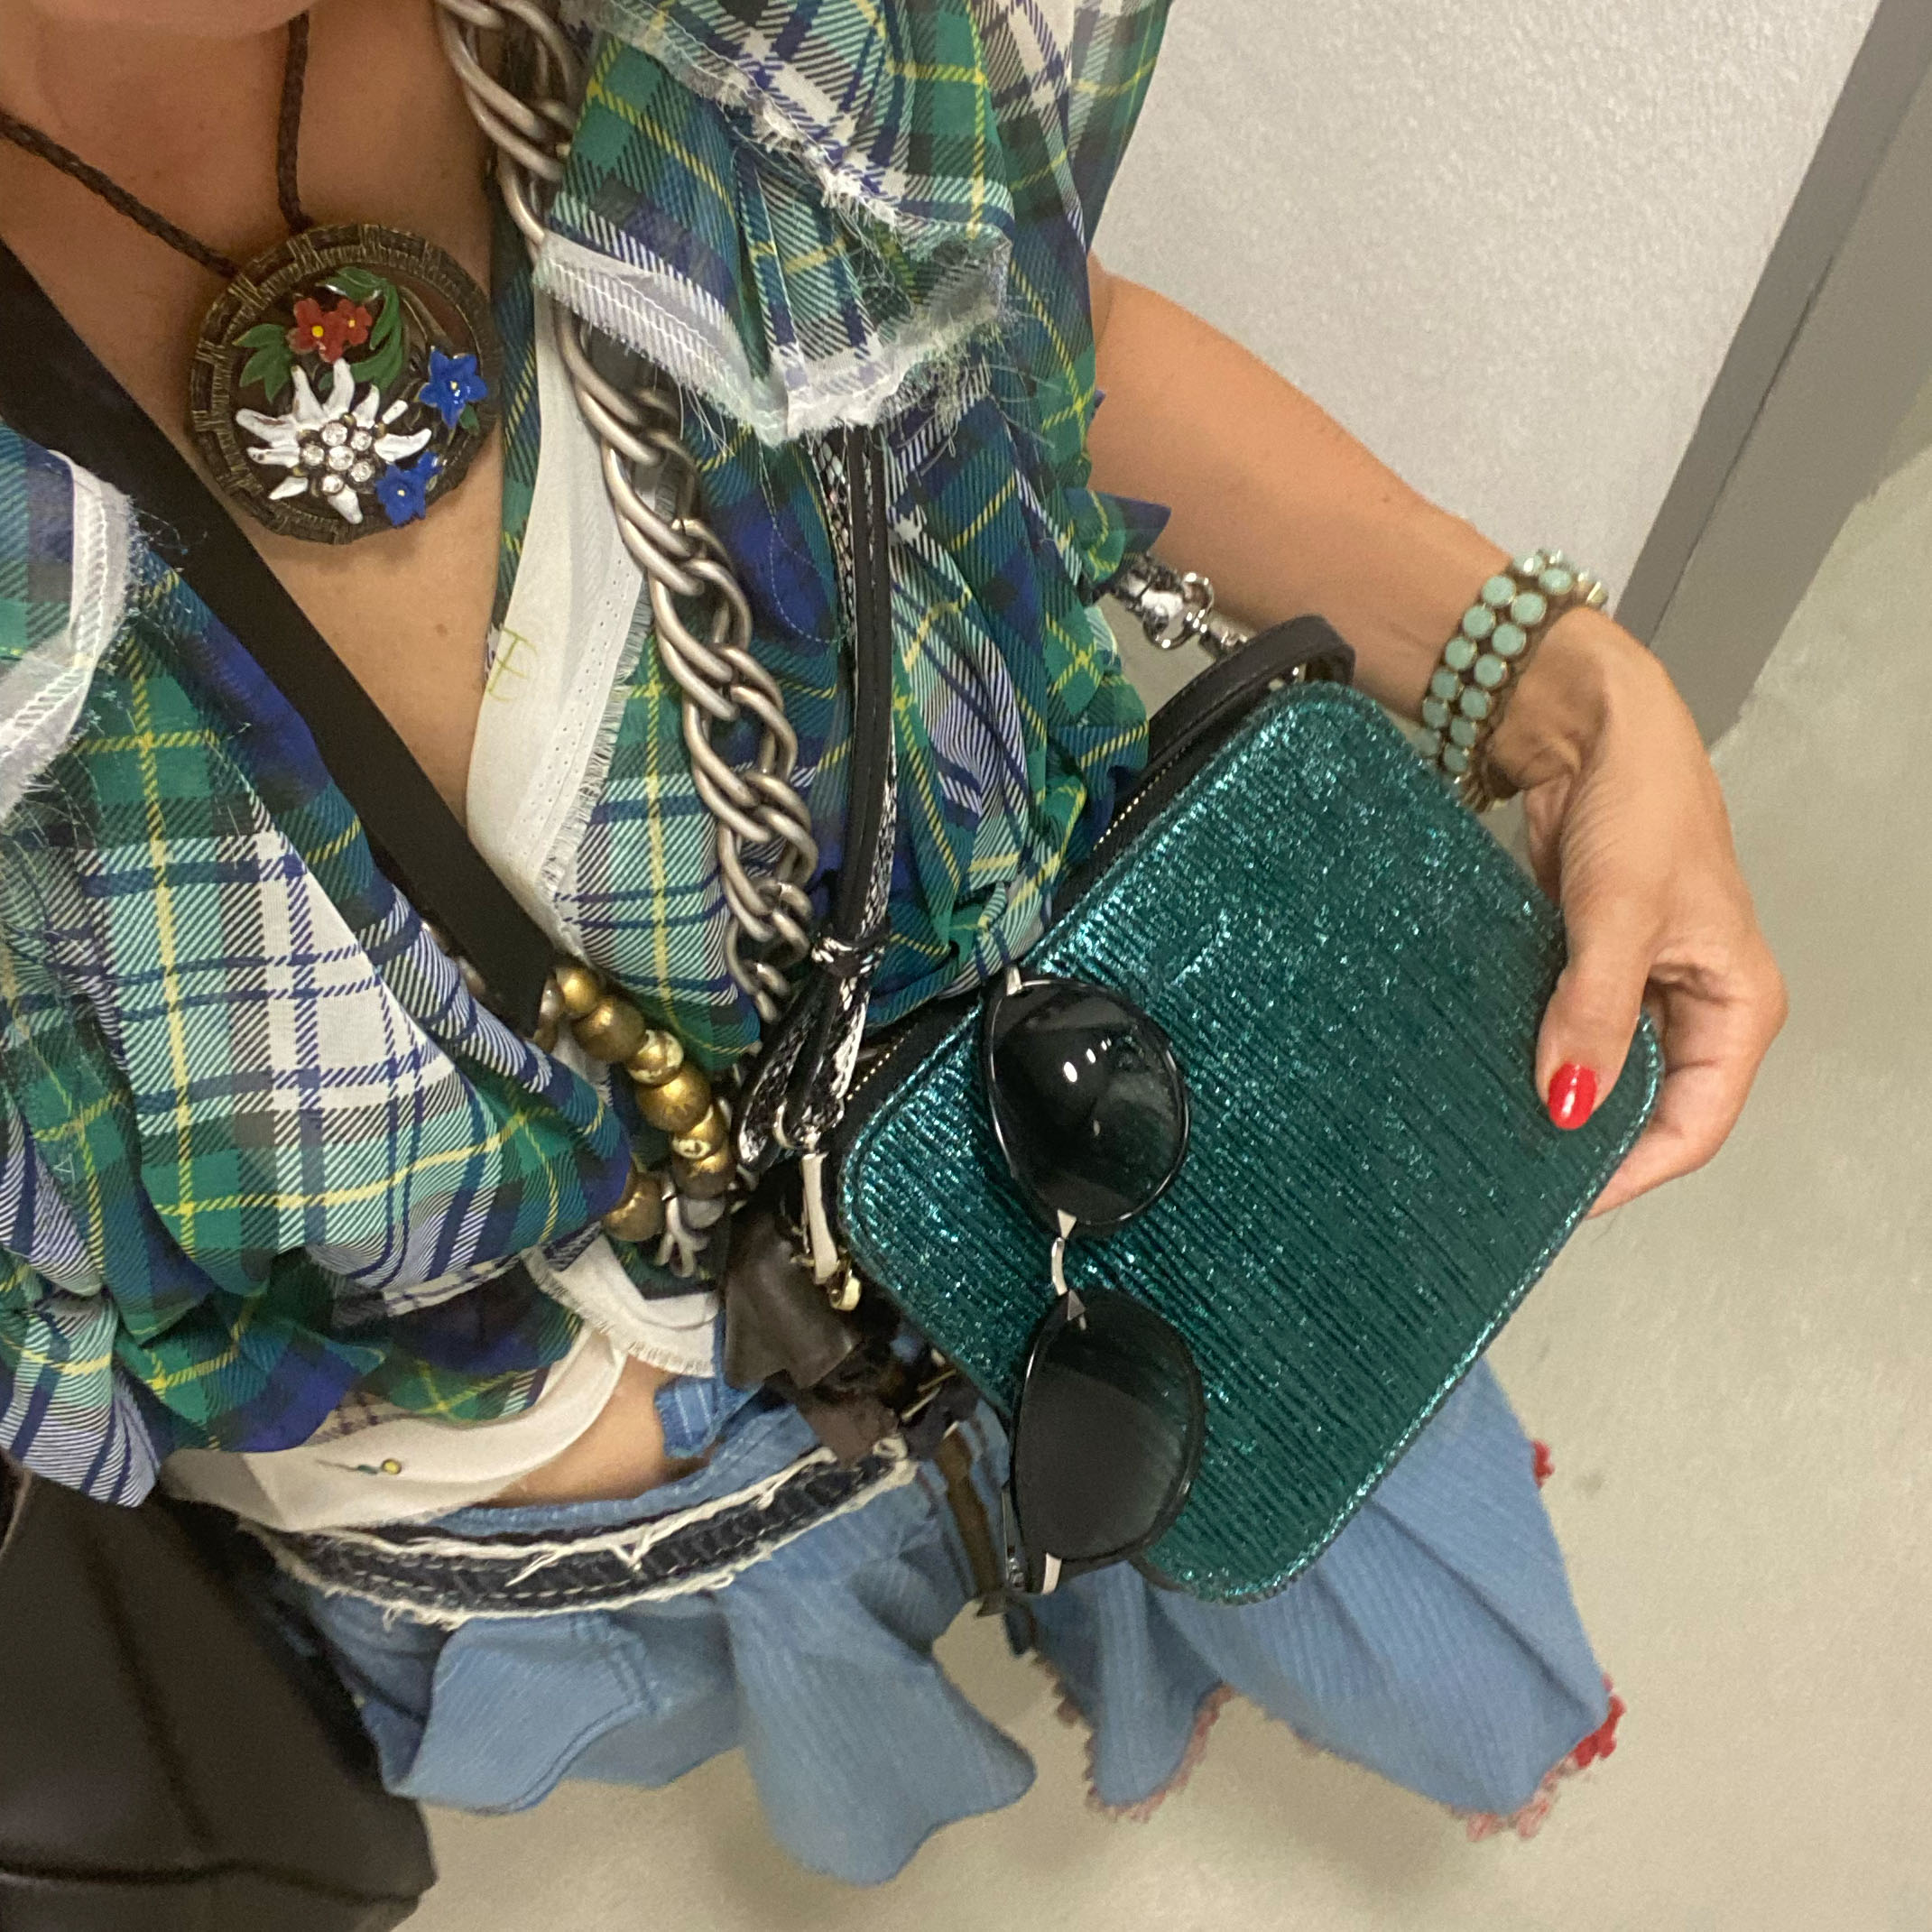 Katy Mercury Bag#1 mit StyleCOVER Wechselklappe grün Dirndl Outfit Oktoberfest Tasche